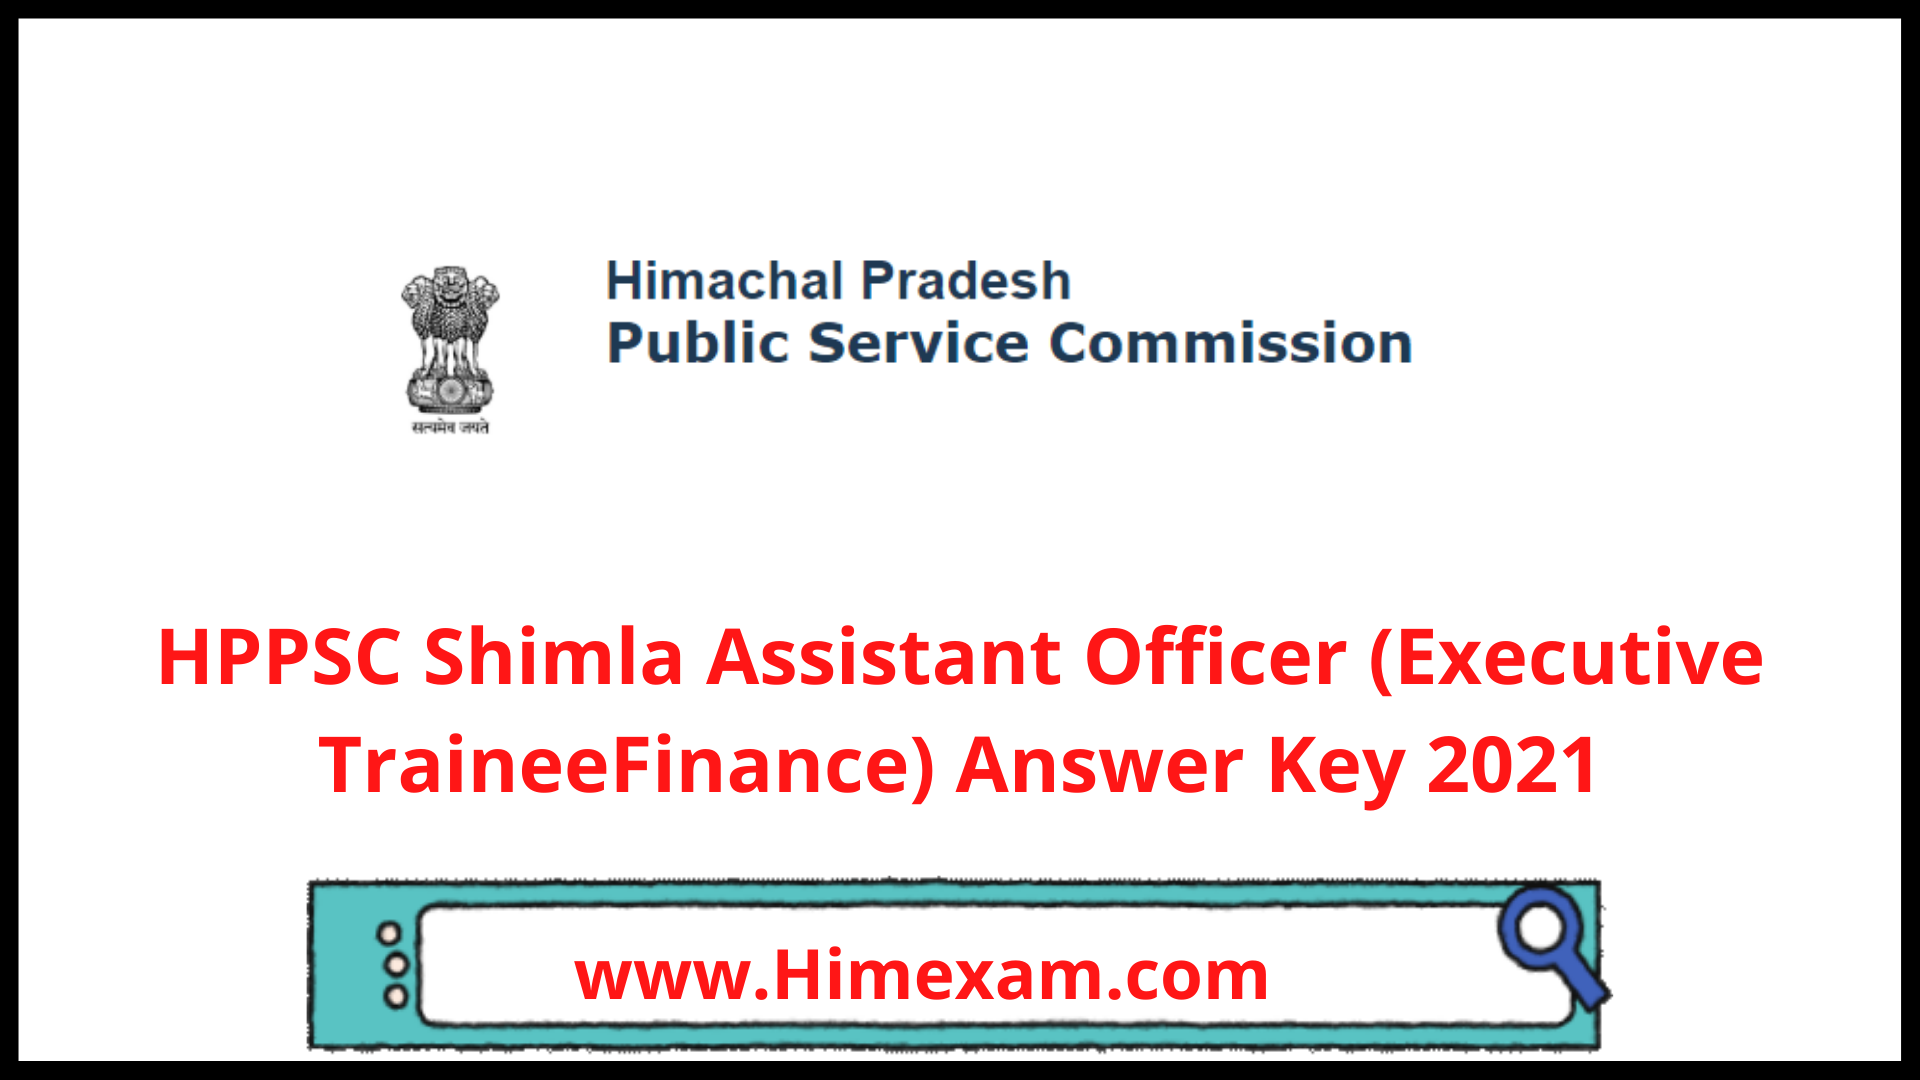 HPPSC Shimla Assistant Officer (Executive TraineeFinance) Answer Key 2021